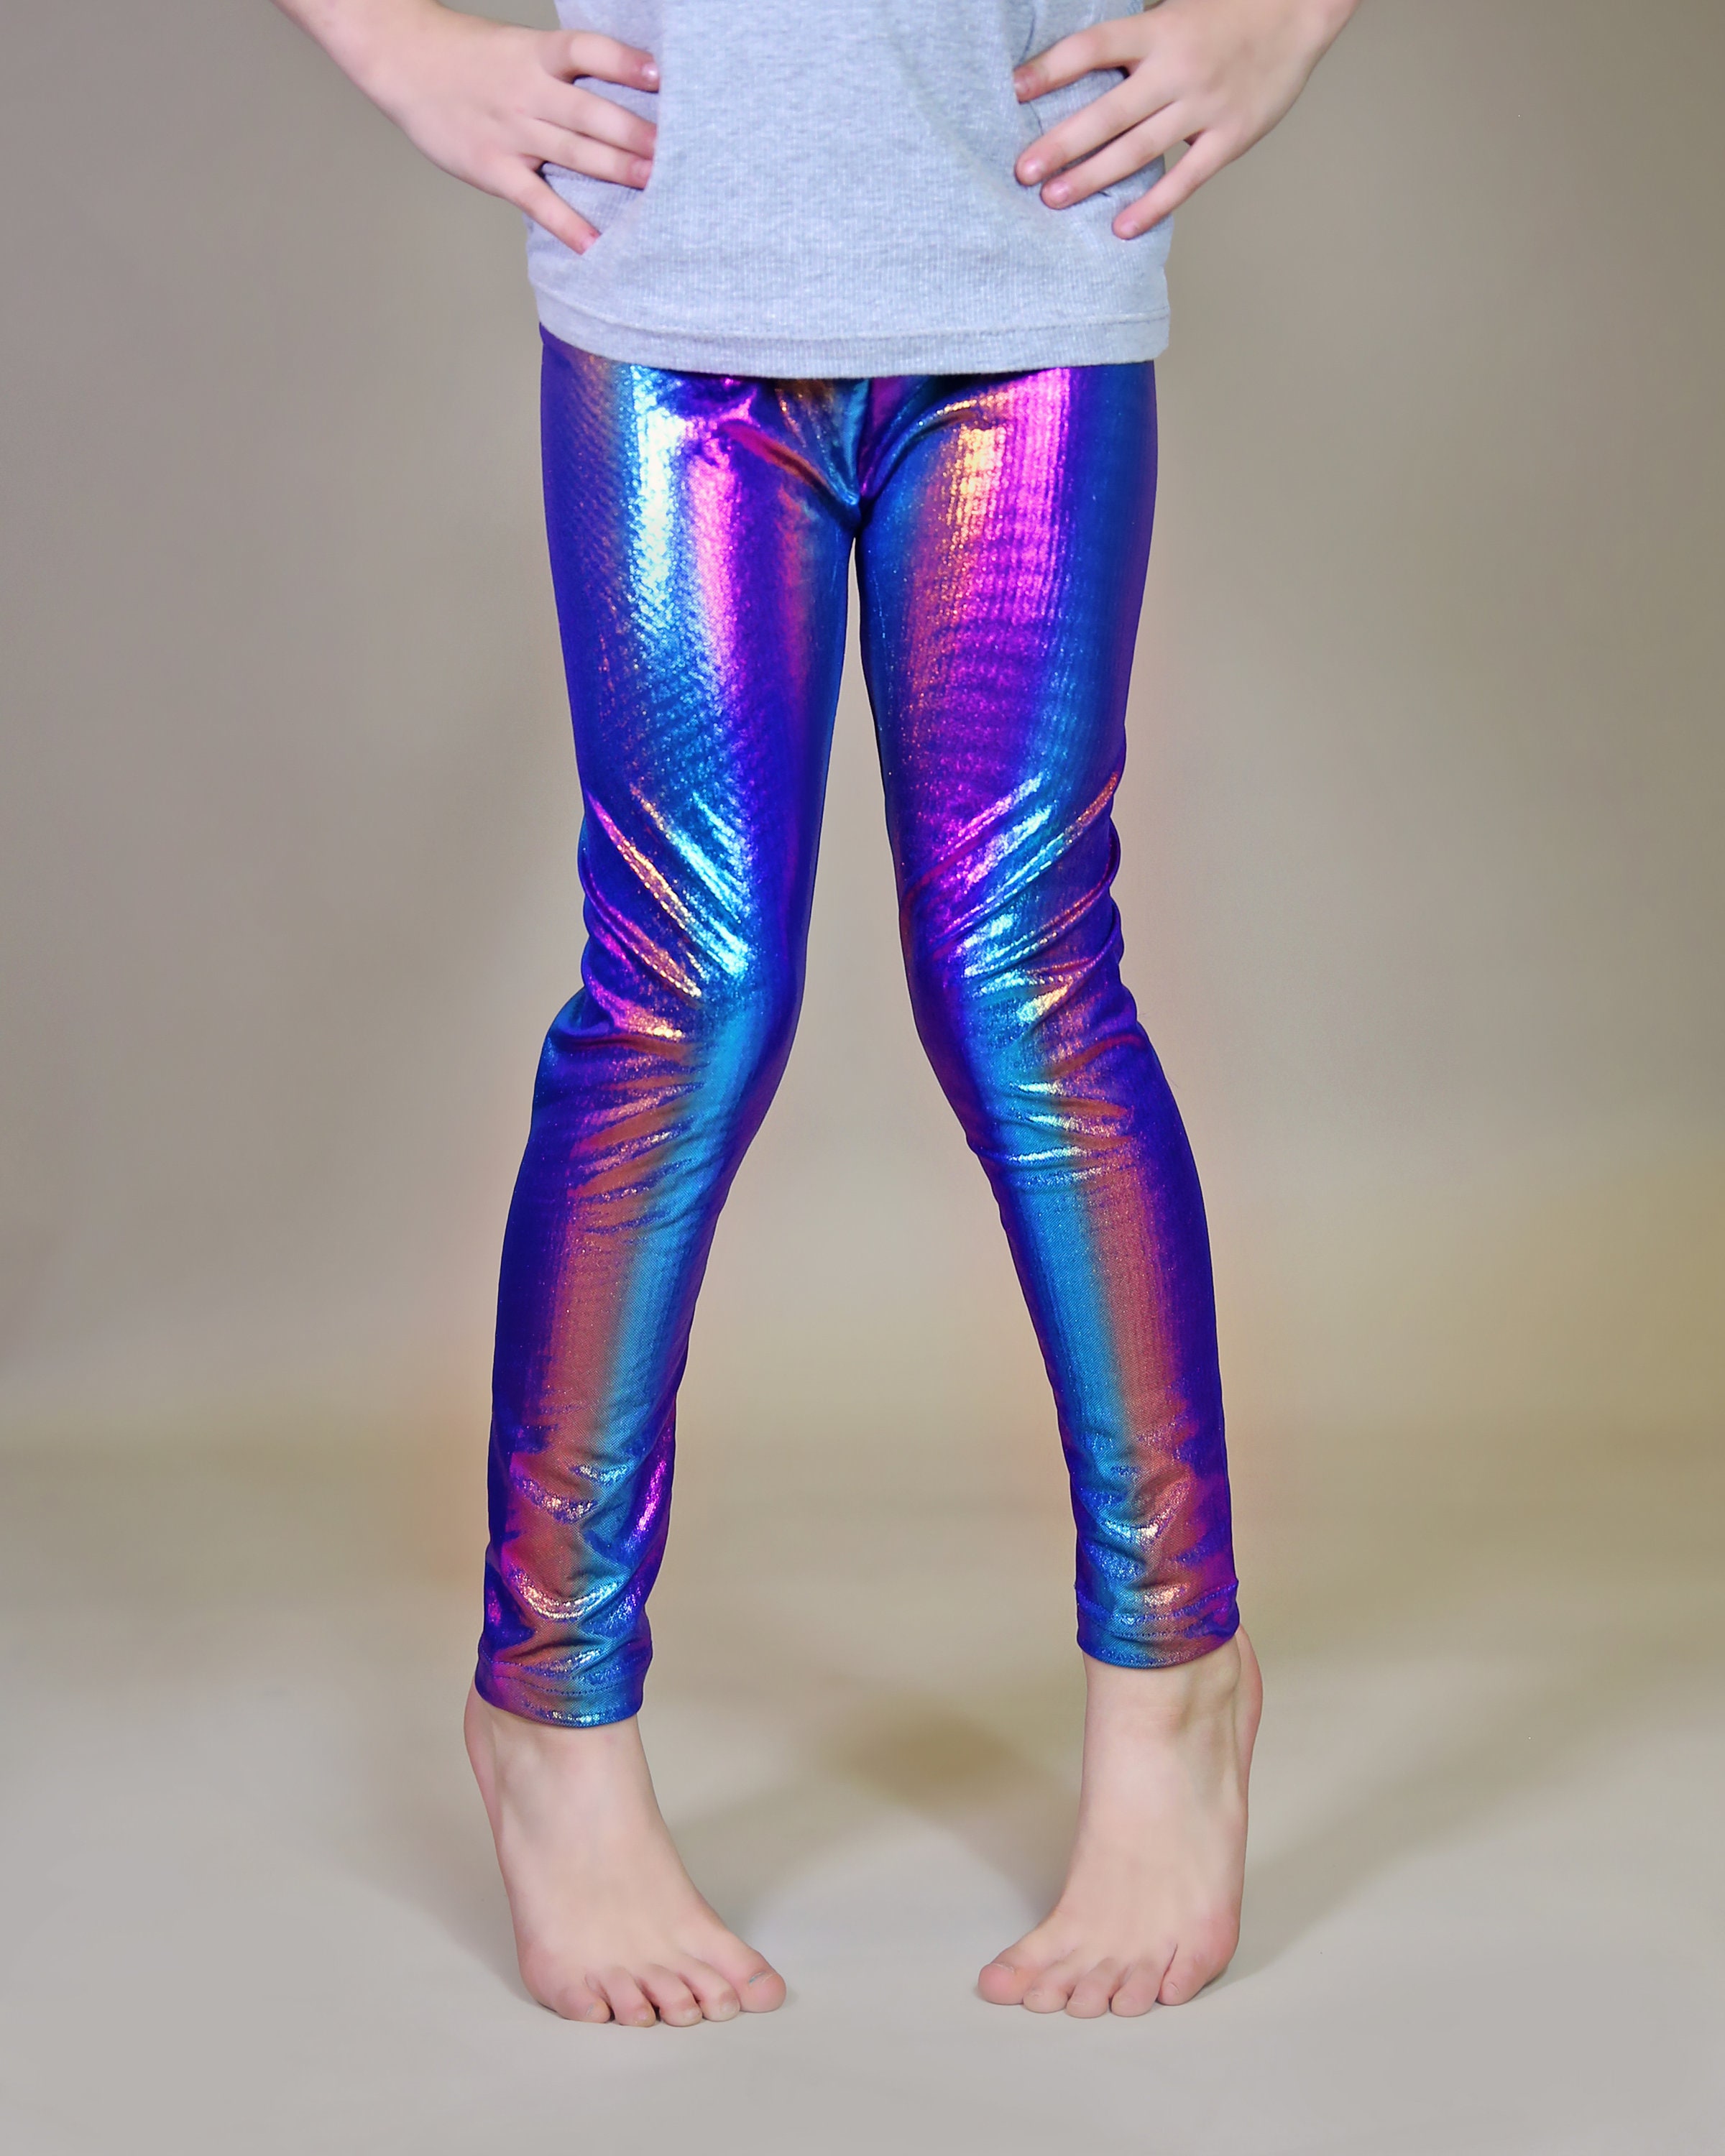 Blurred Rainbow Metallic Leggings -Rainbow Leggings, Metallic Rainbow  Pants, Metallic Leggings, Dance pants, Birthday outfit, Gift, Purple